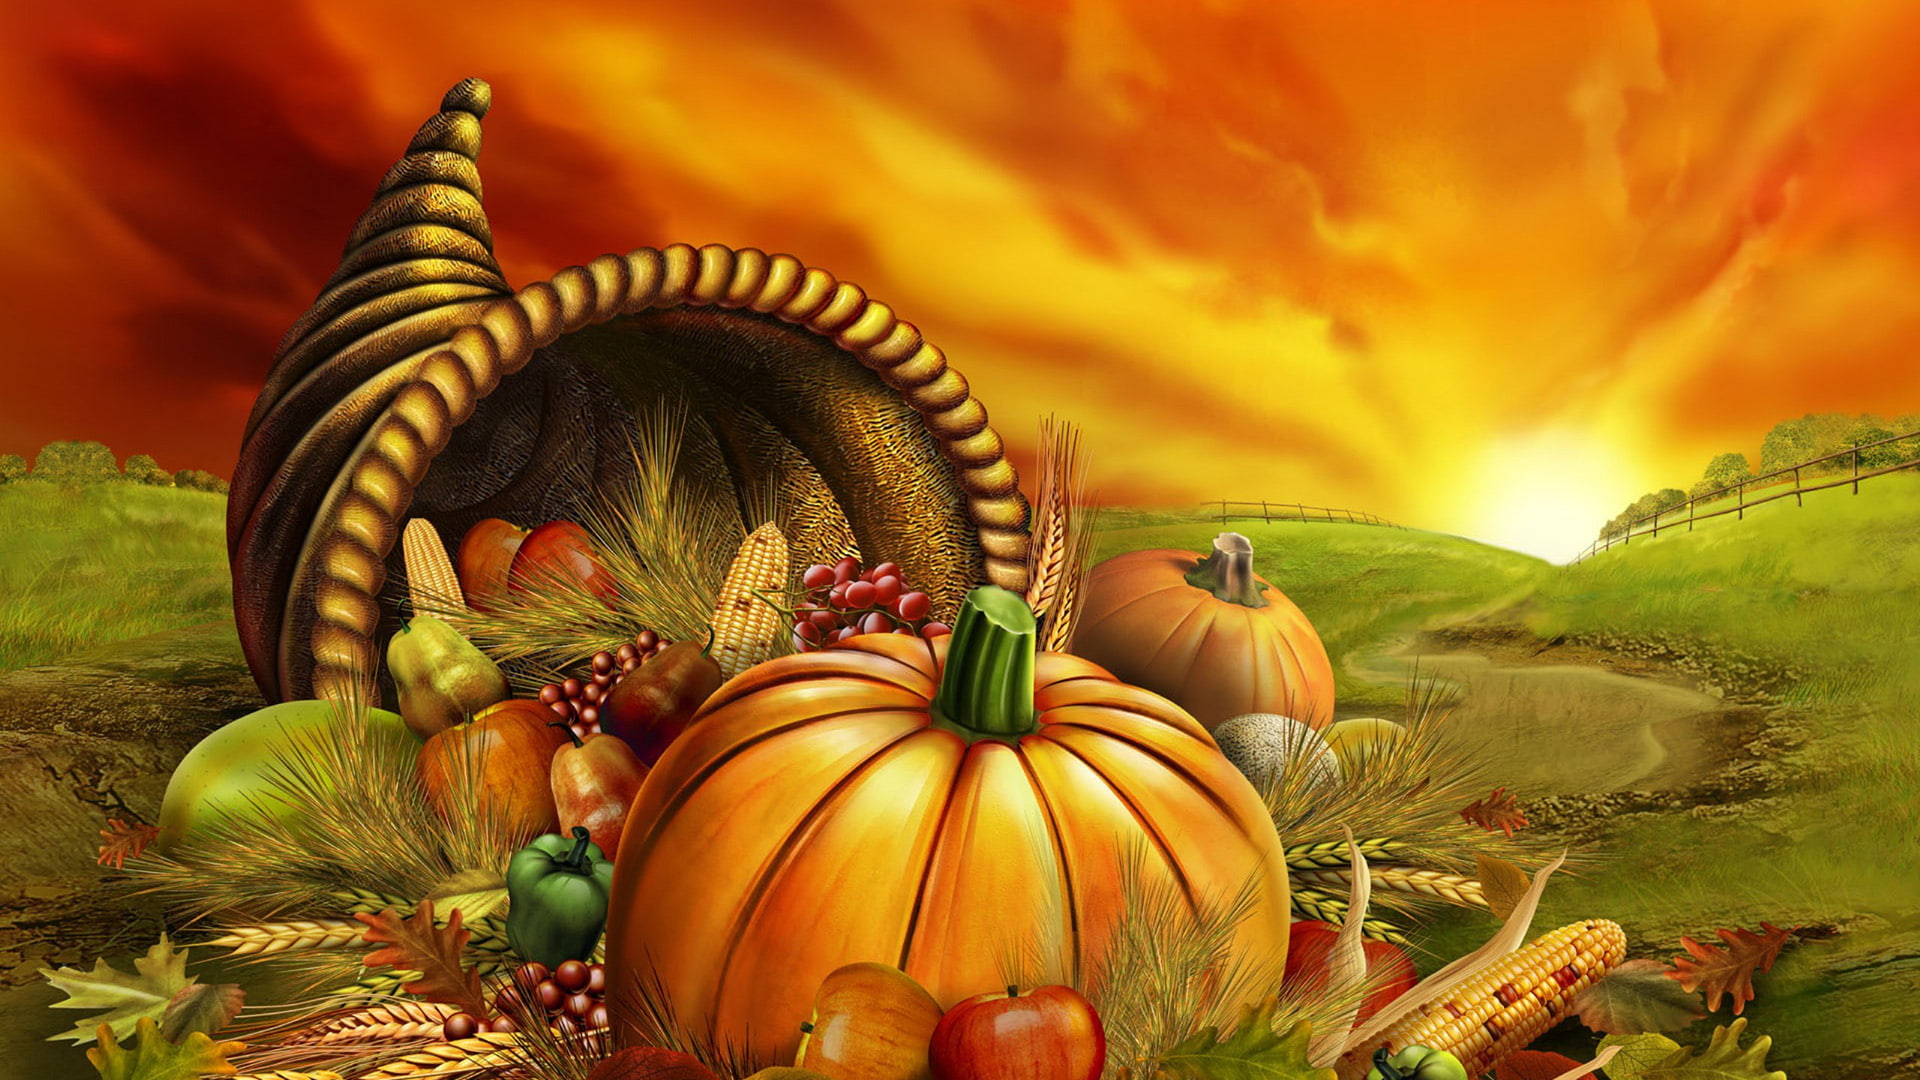 squash, pumpkin, vegetable, produce, halloween, orange, autumn